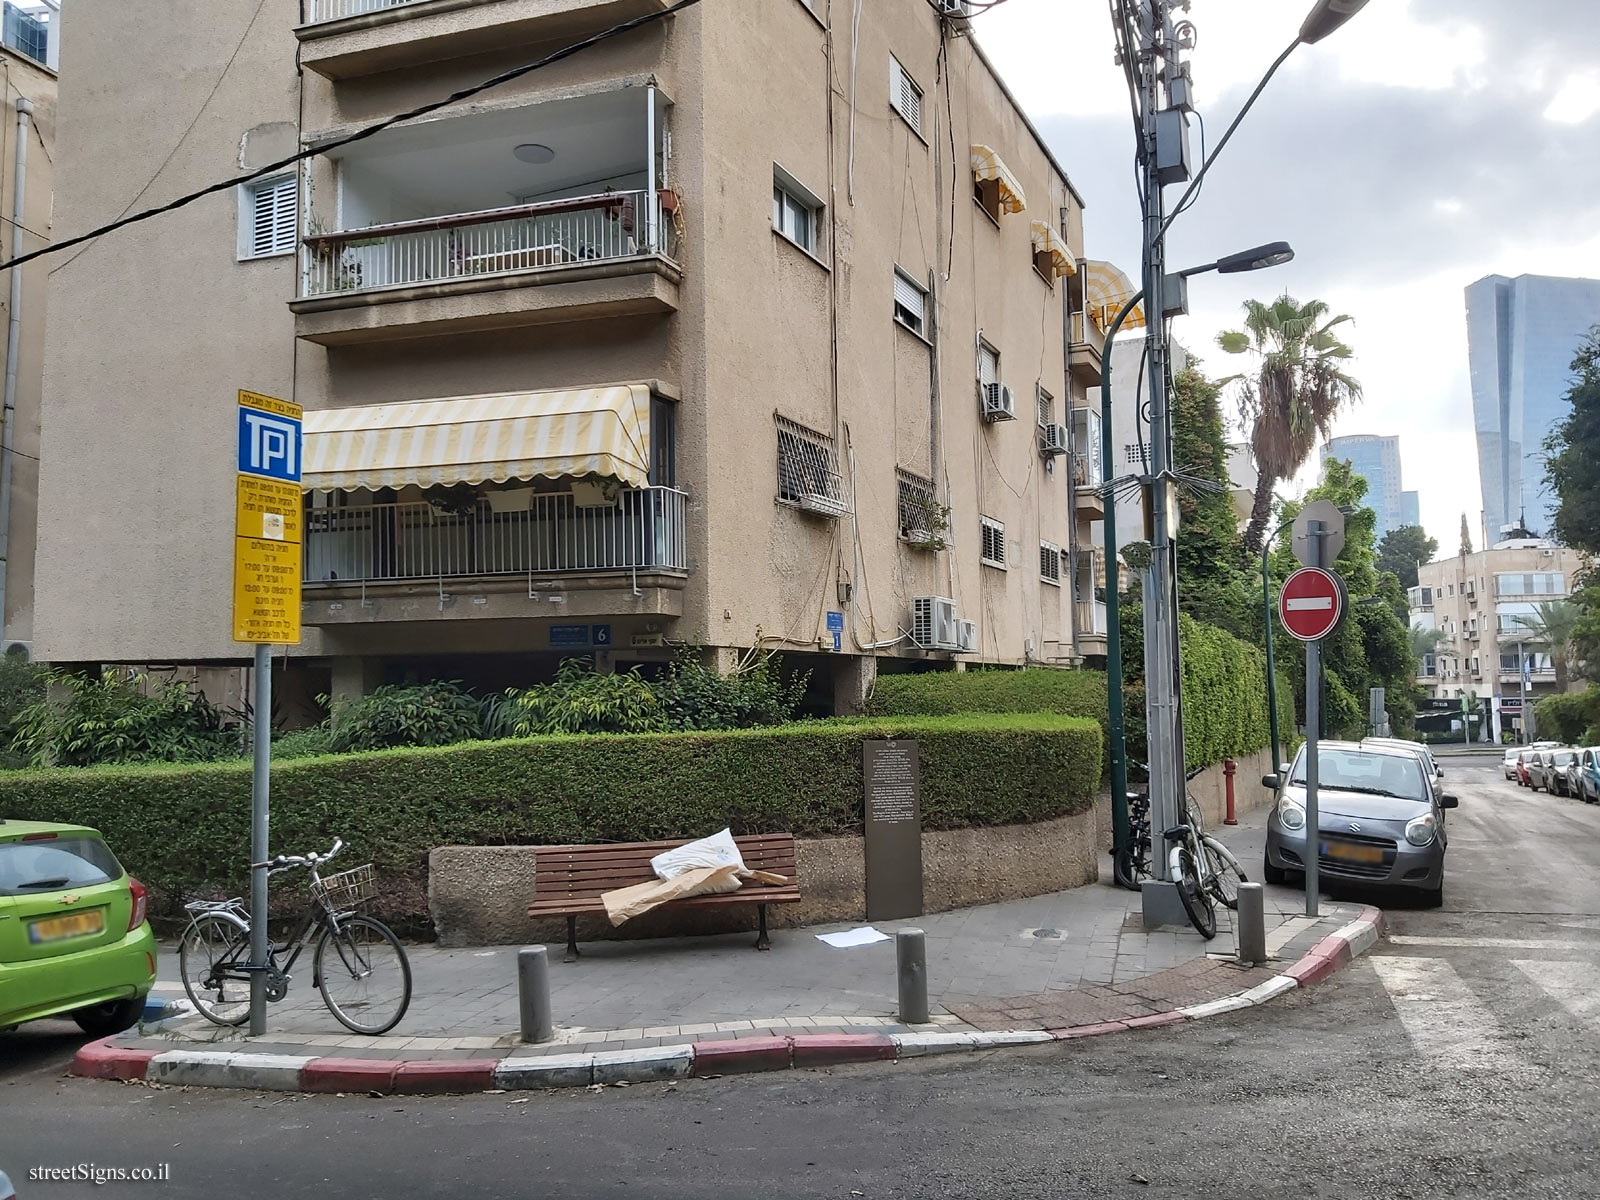 Menachem Begin’s residence in 1947 - Rozenbaum St 1, Tel Aviv-Yafo, Israel